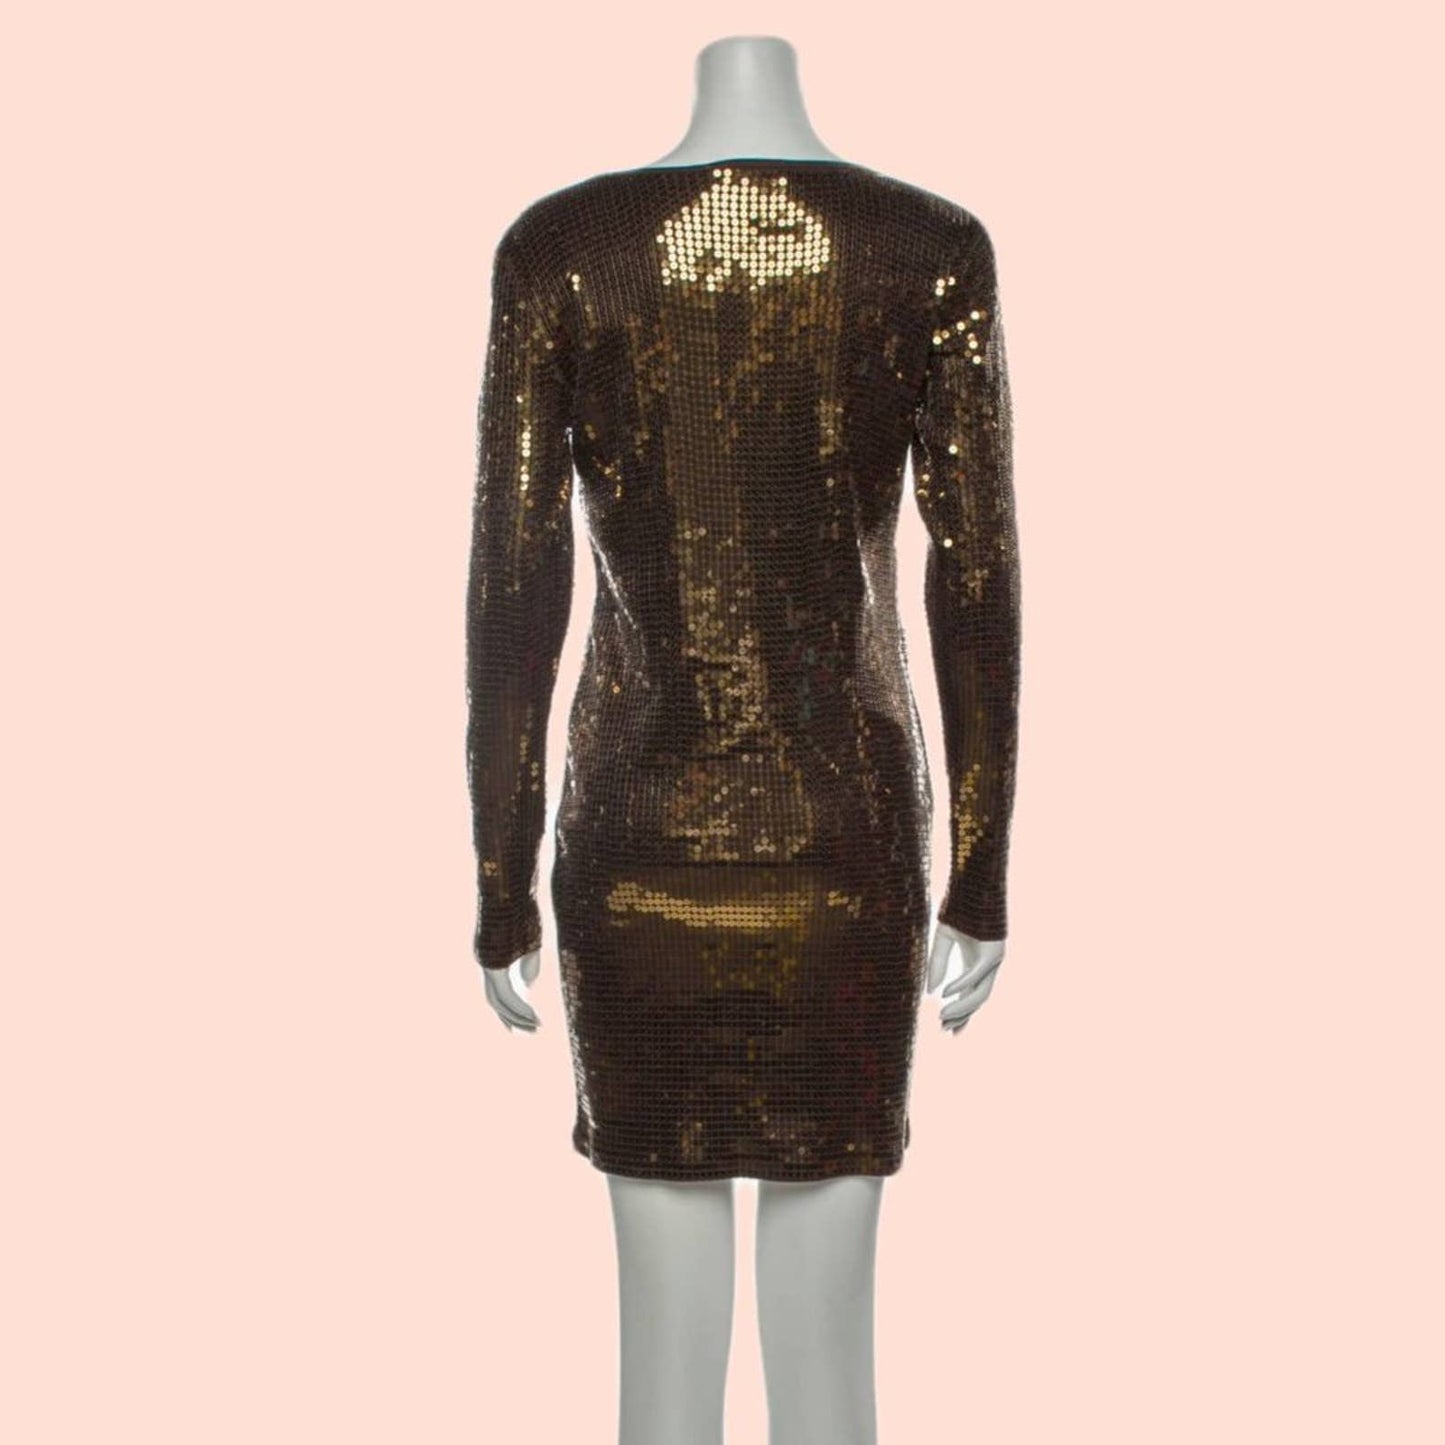 MICHAEL KORS Bronze Sequin Long Sleeve Cotton Dress